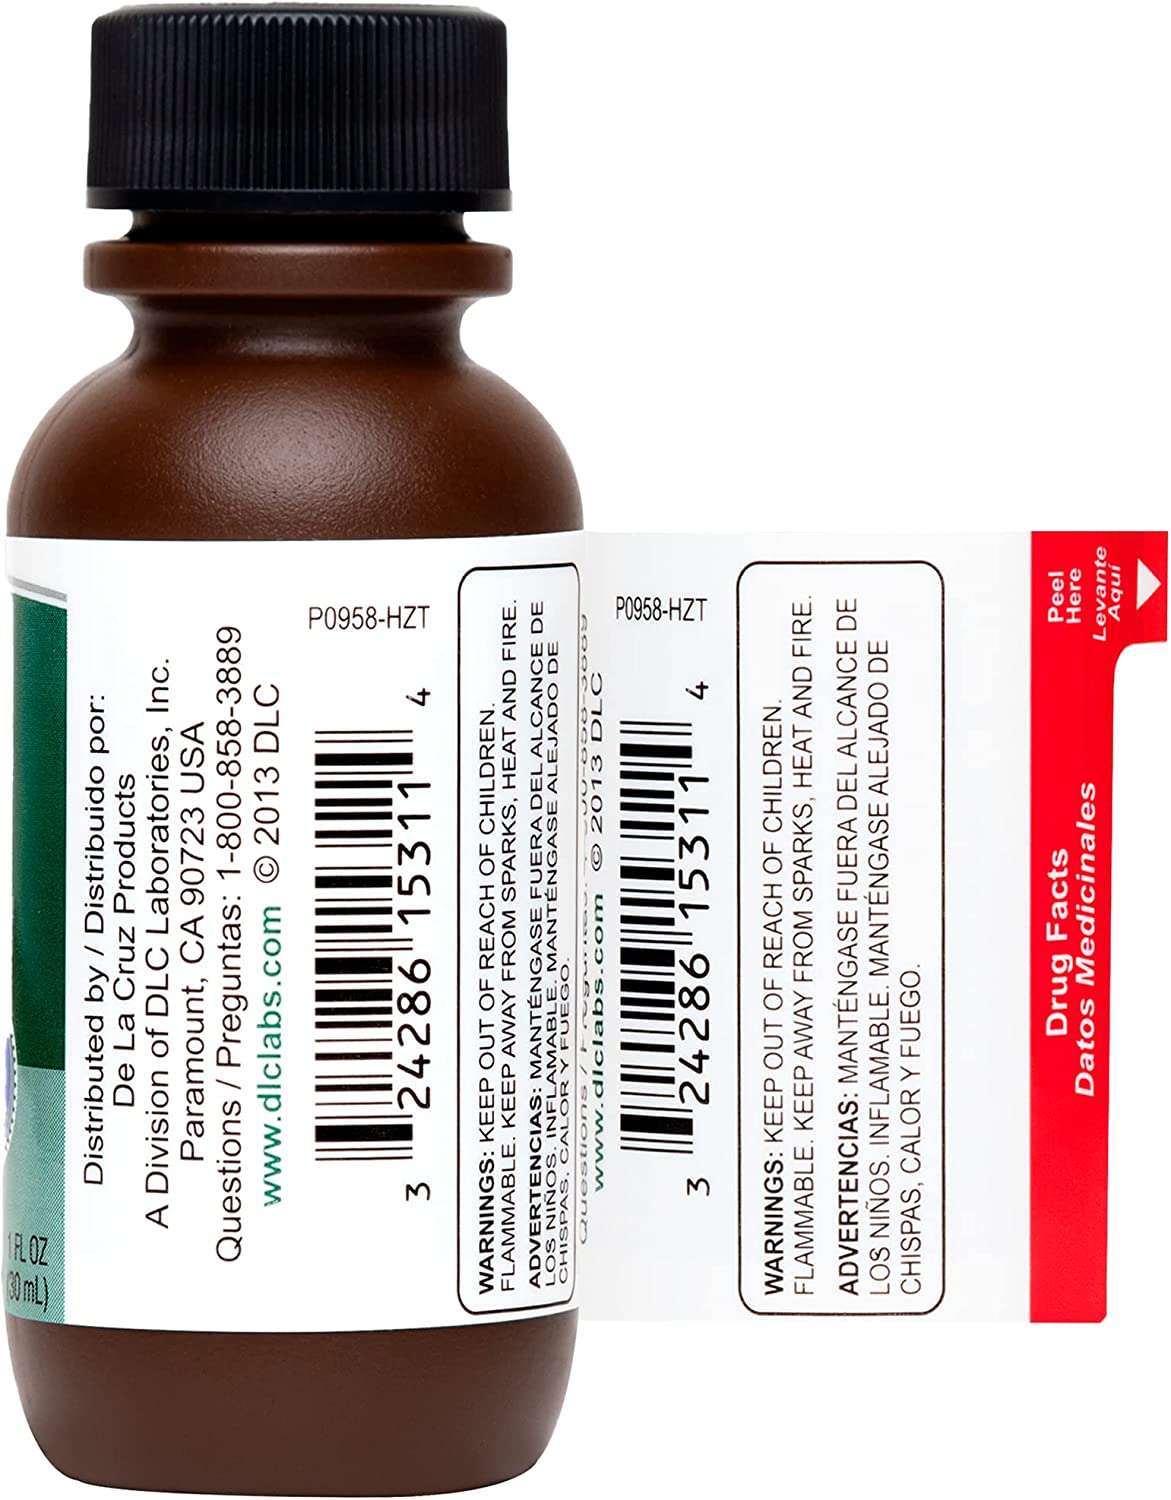 De La Cruz Decolorized Iodine First Aid Antiseptic 1 fl Oz (30 mL), 2 Pack - image 2 of 11